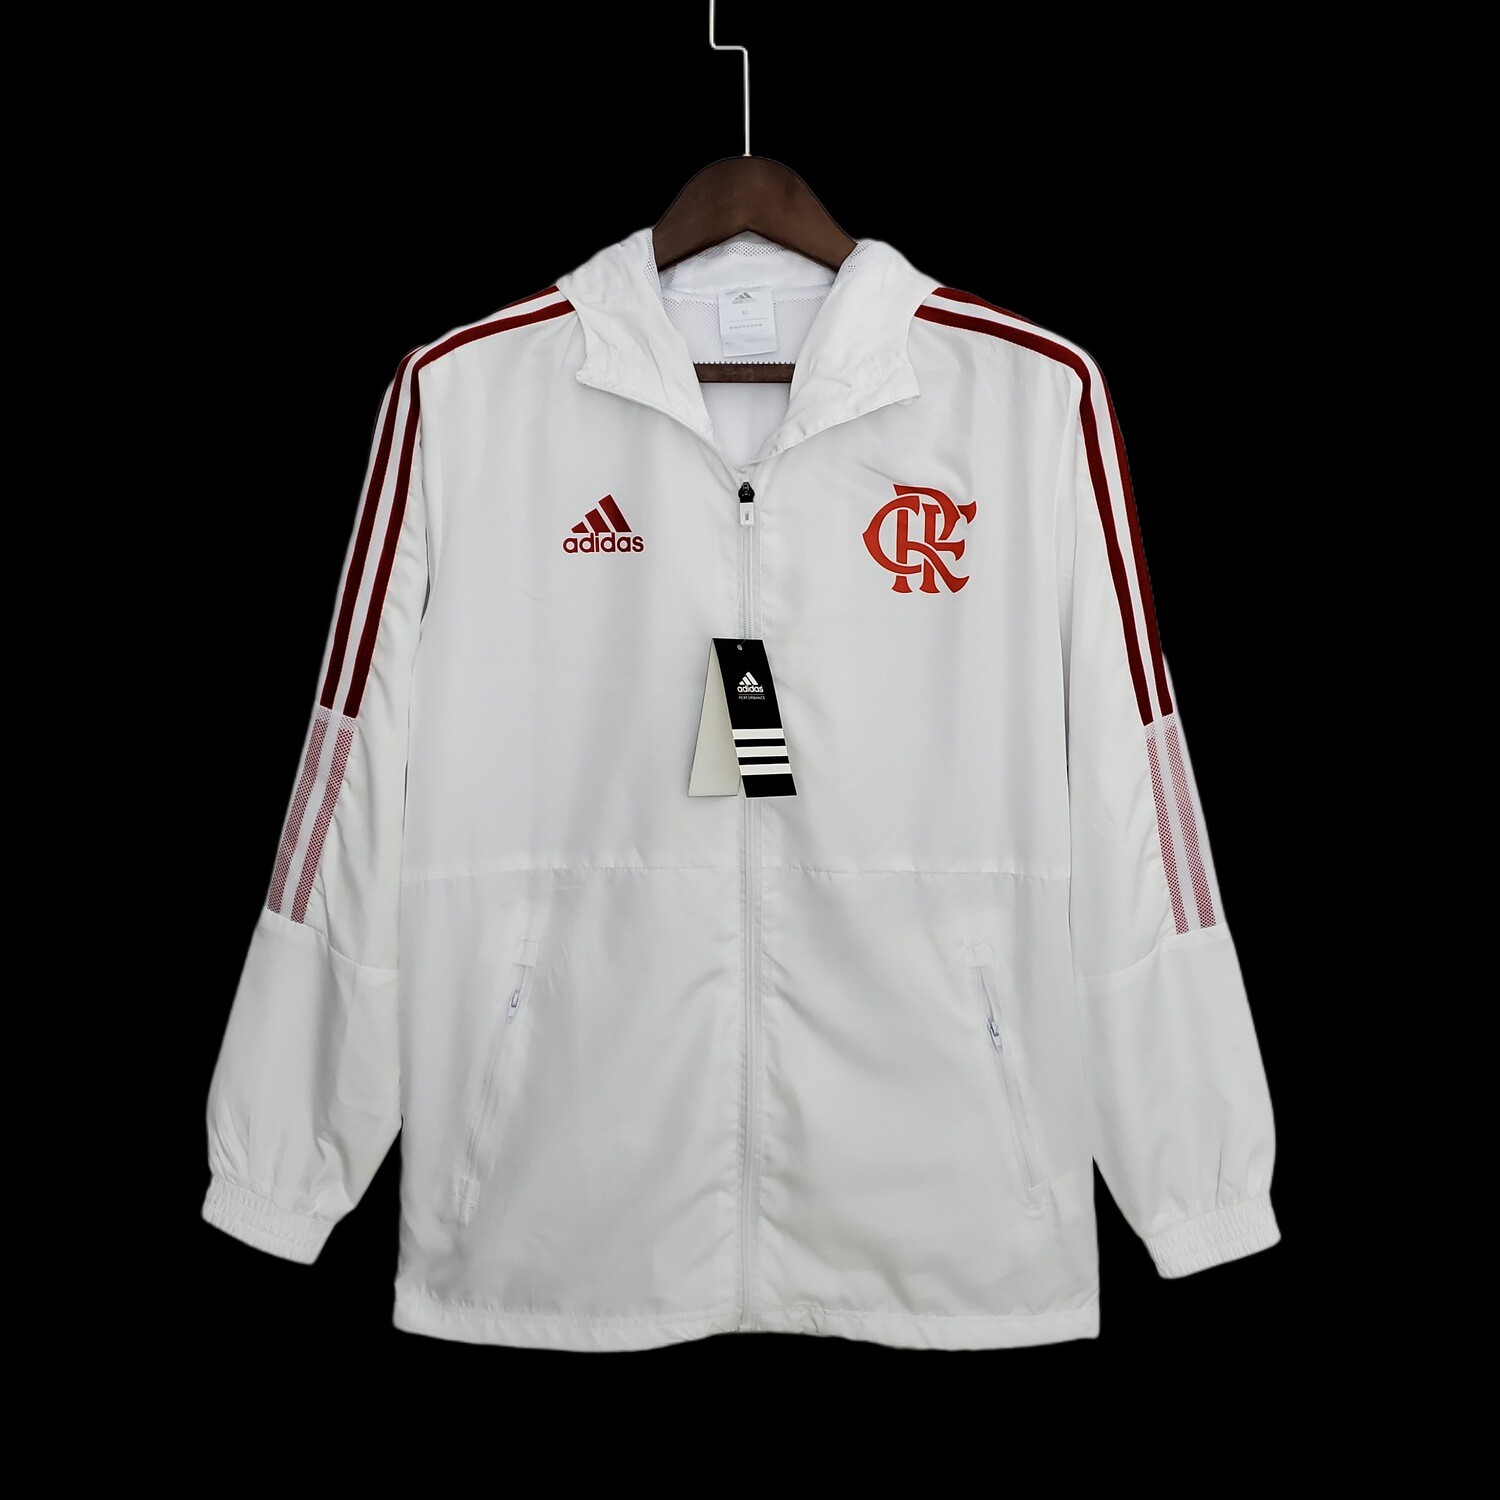 Agasalho Adidas Corta Vento do Flamengo Branco 2022